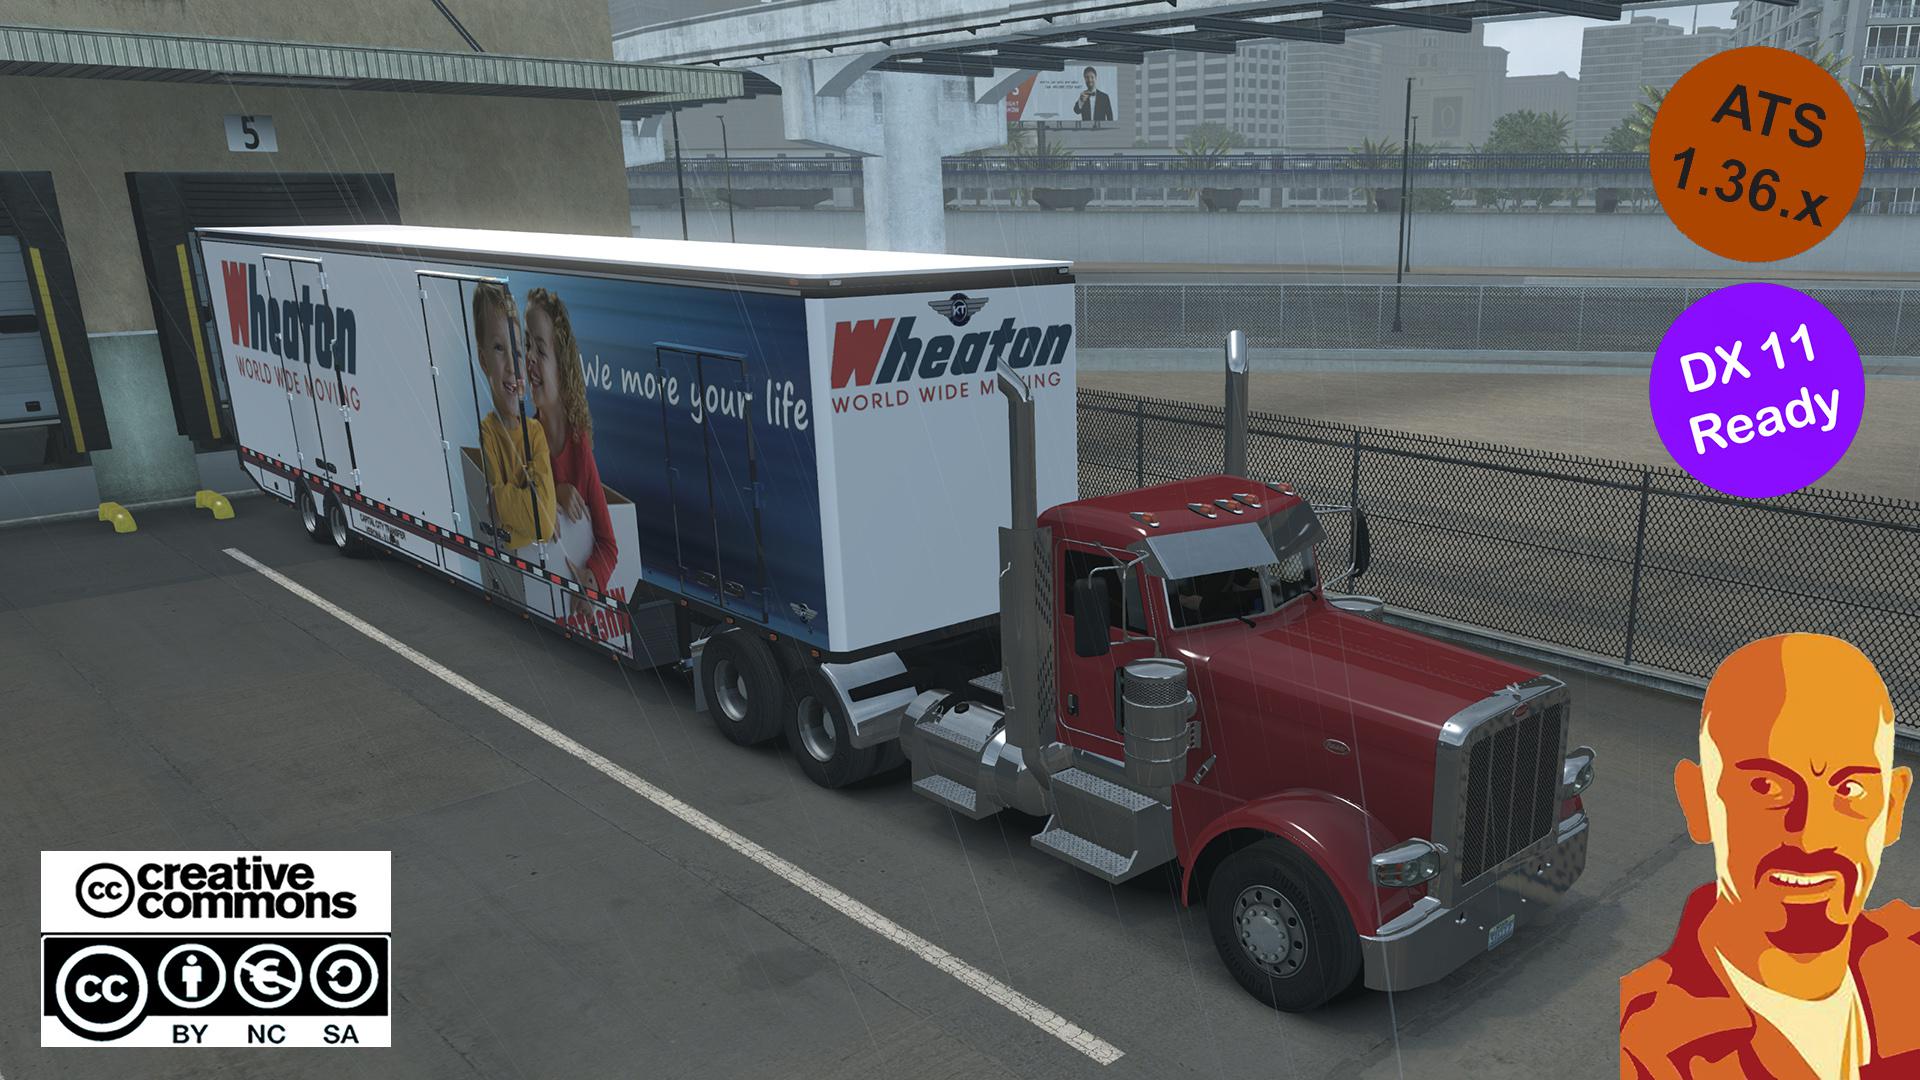 Ats Kentucky Rd Moving Van Trailer Reworked 136x American Truck Simulator Modsclub